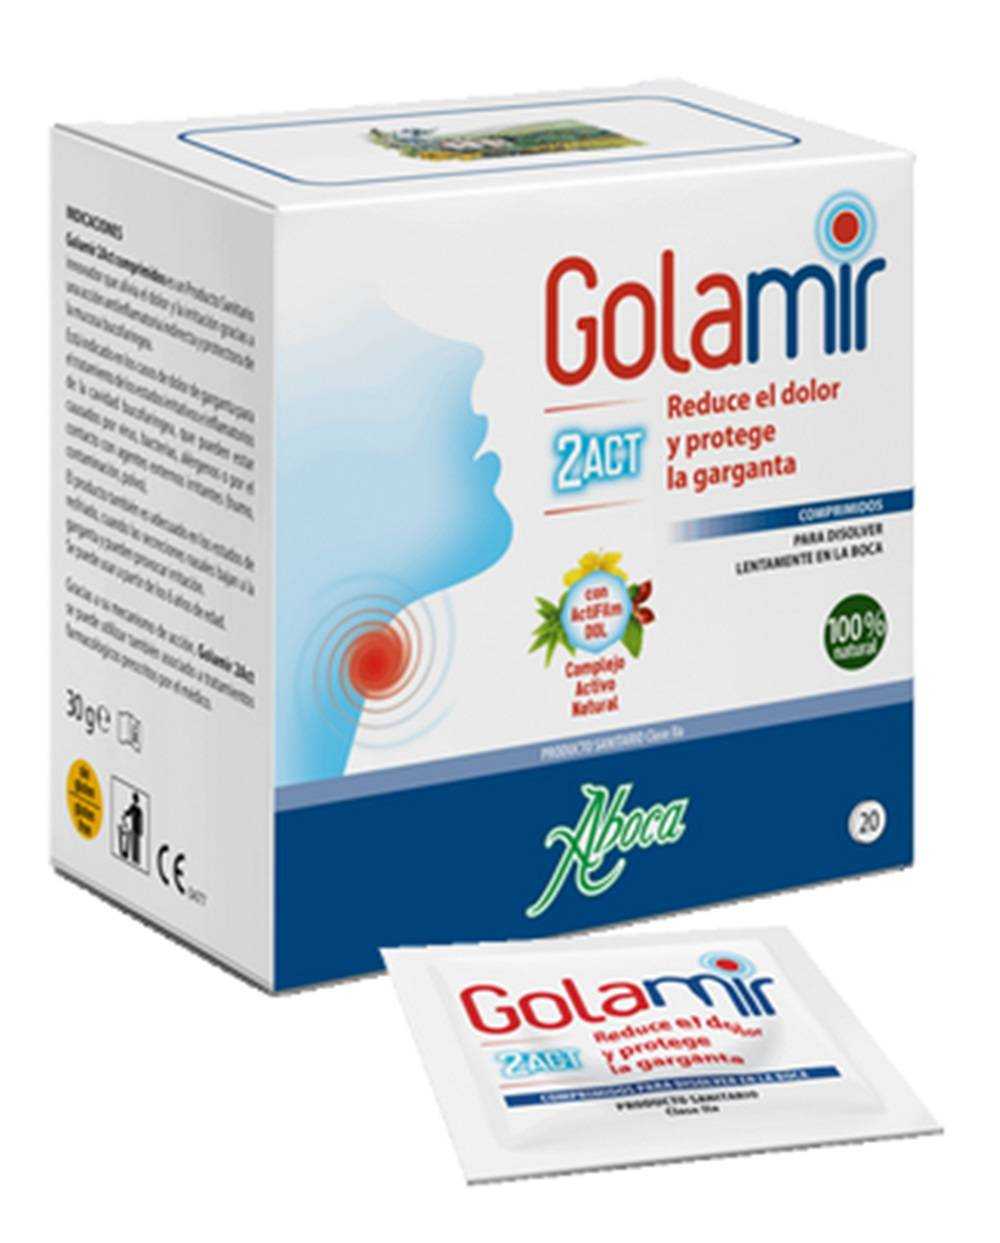 Golamir 2 ACT 20 comprimidos